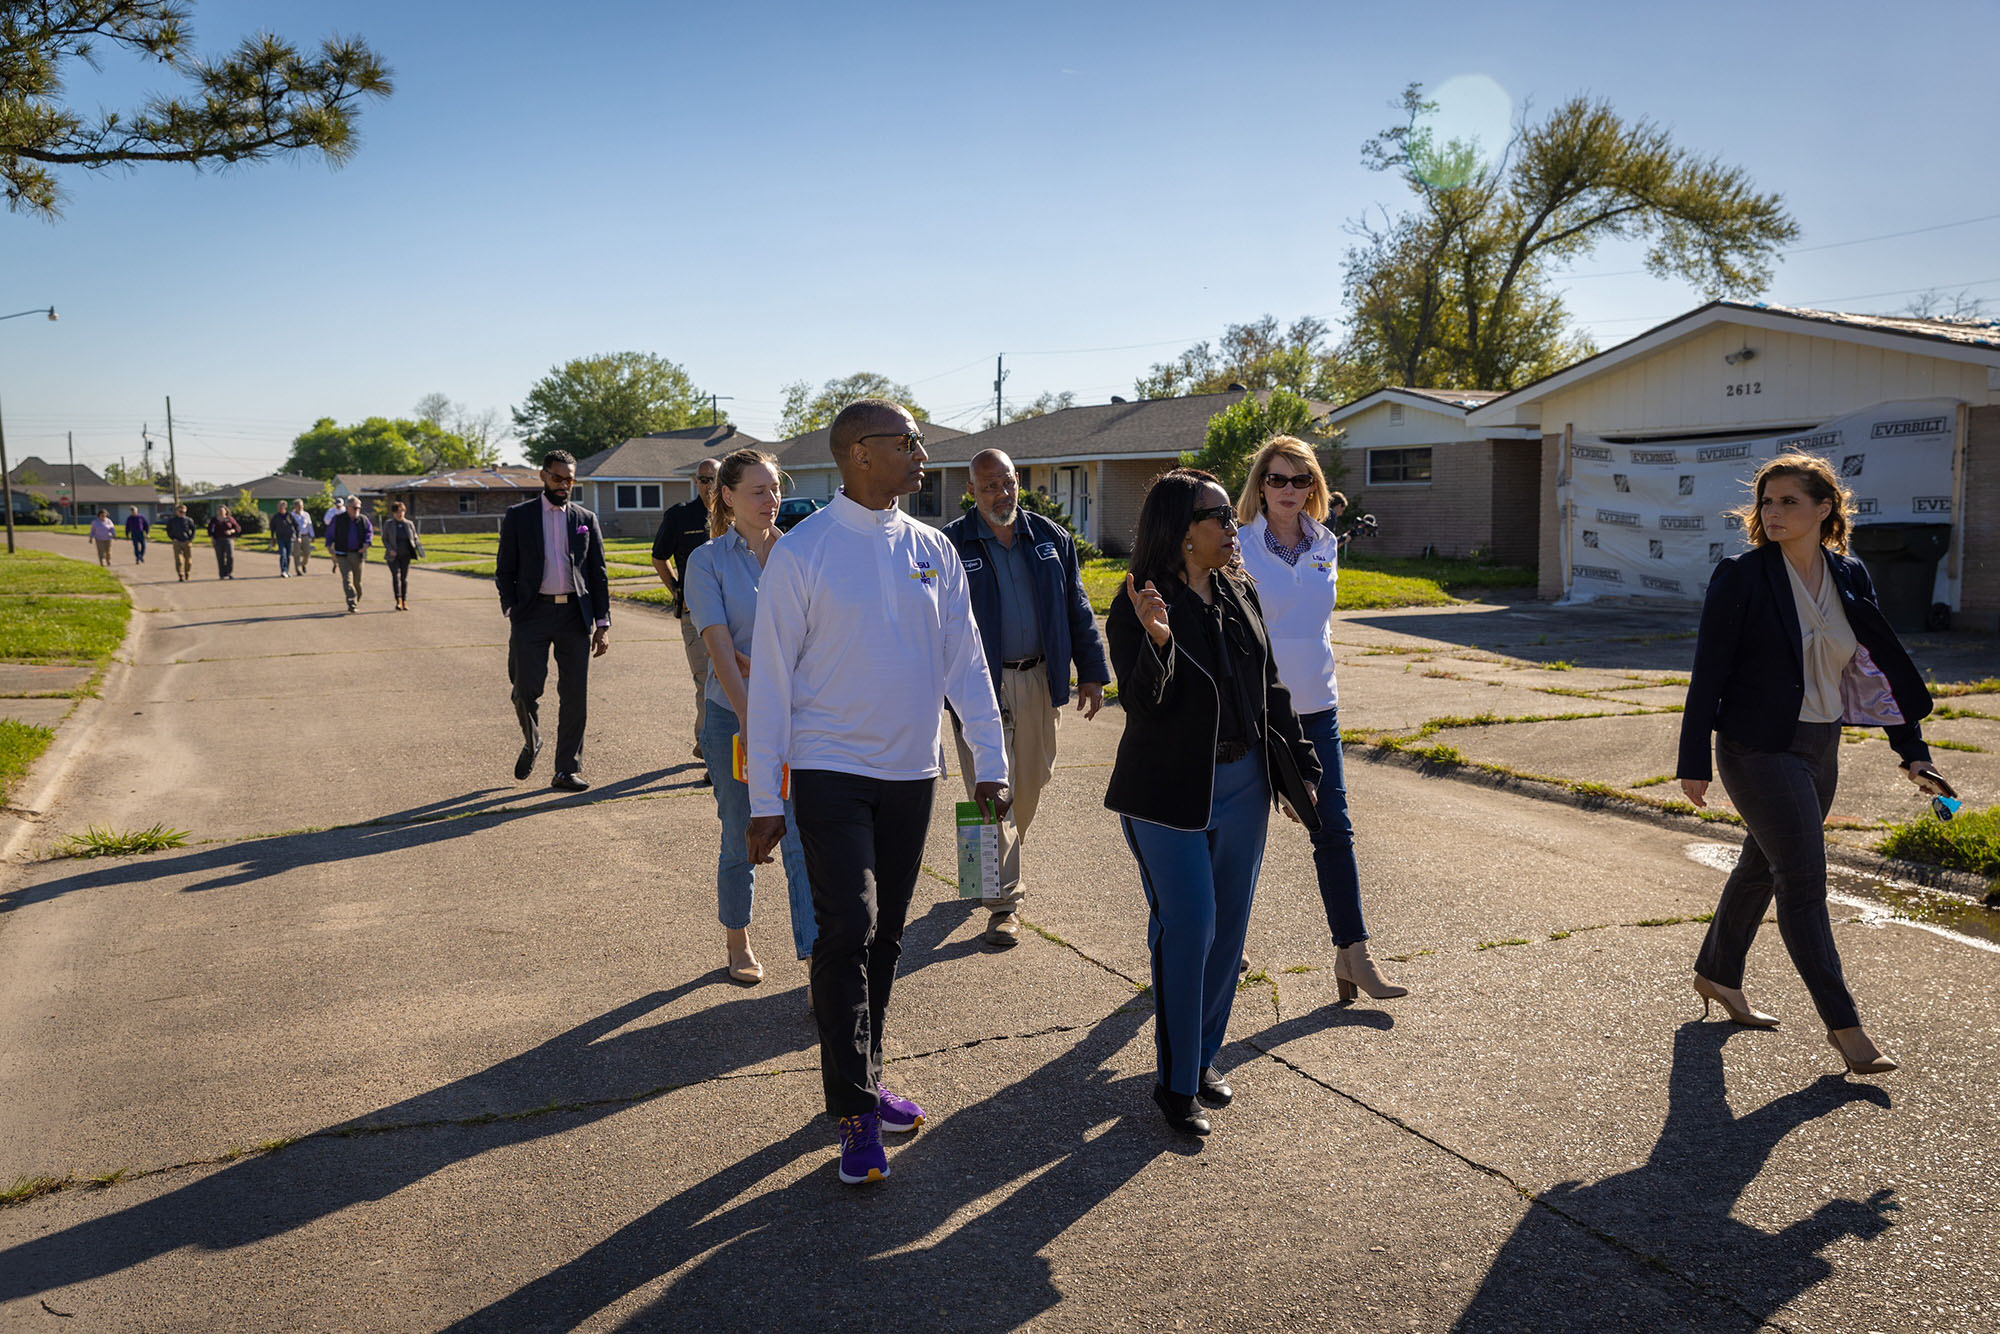 President Tate and group tour a storm-damaged neighborhood